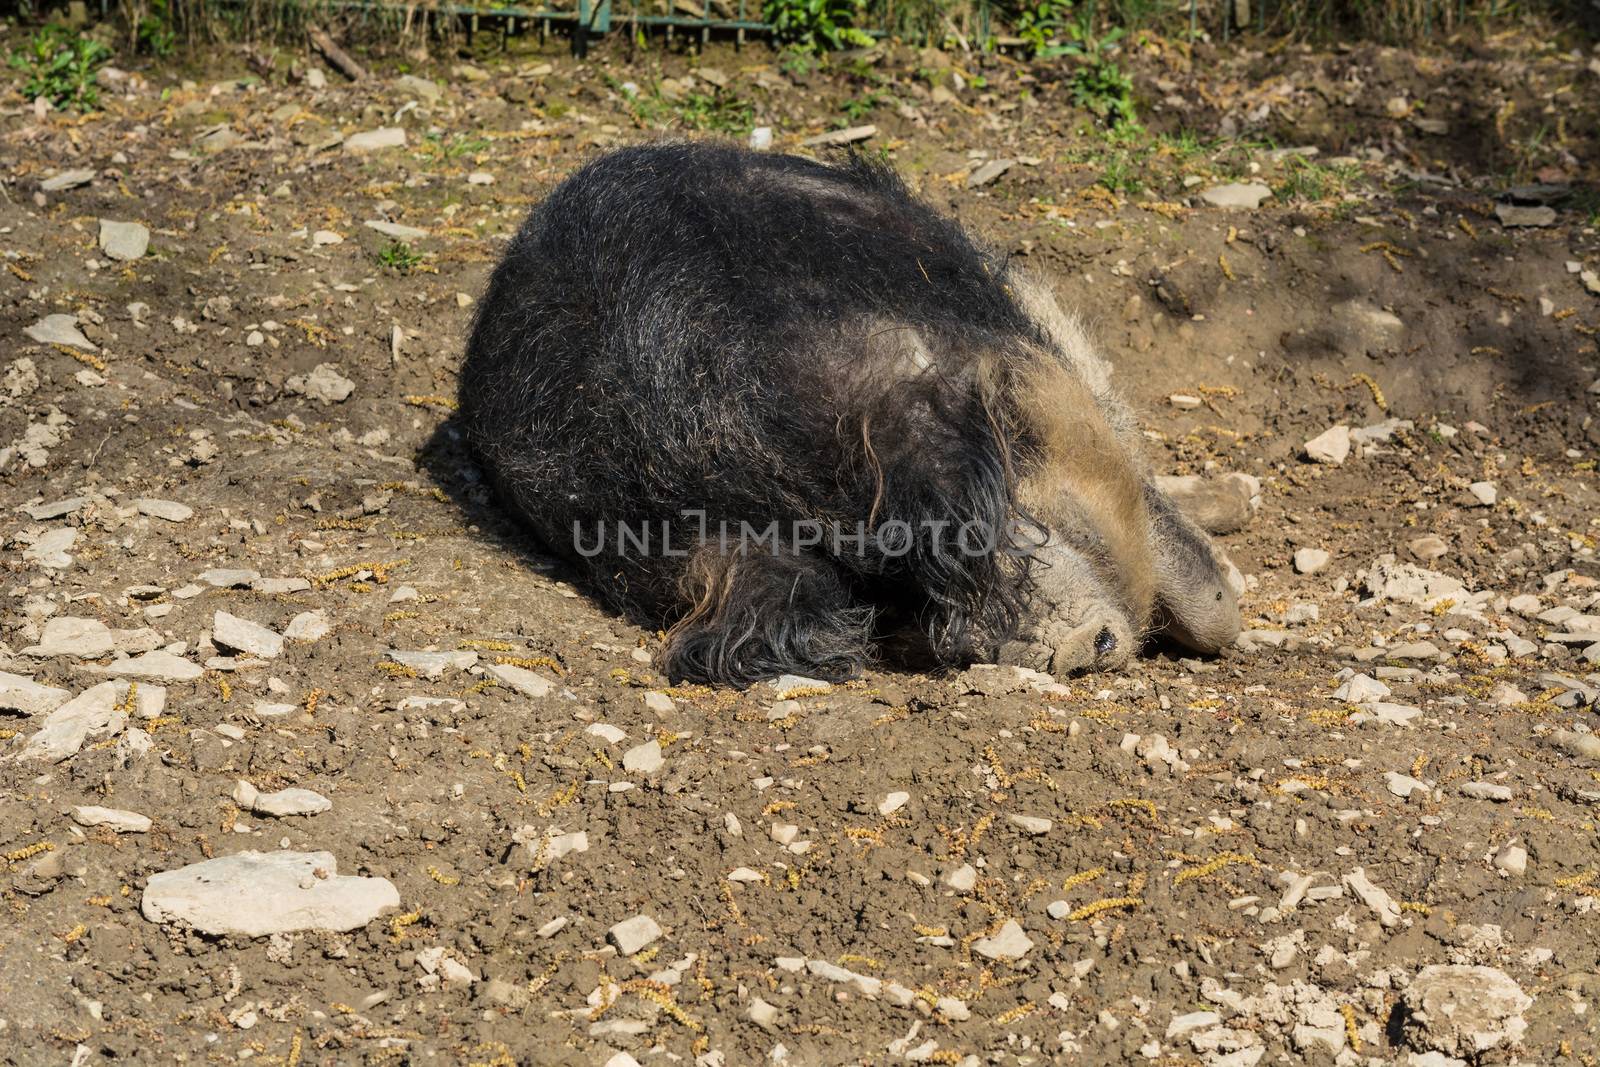 European wild boar in the mud in the warm summer sun lying.